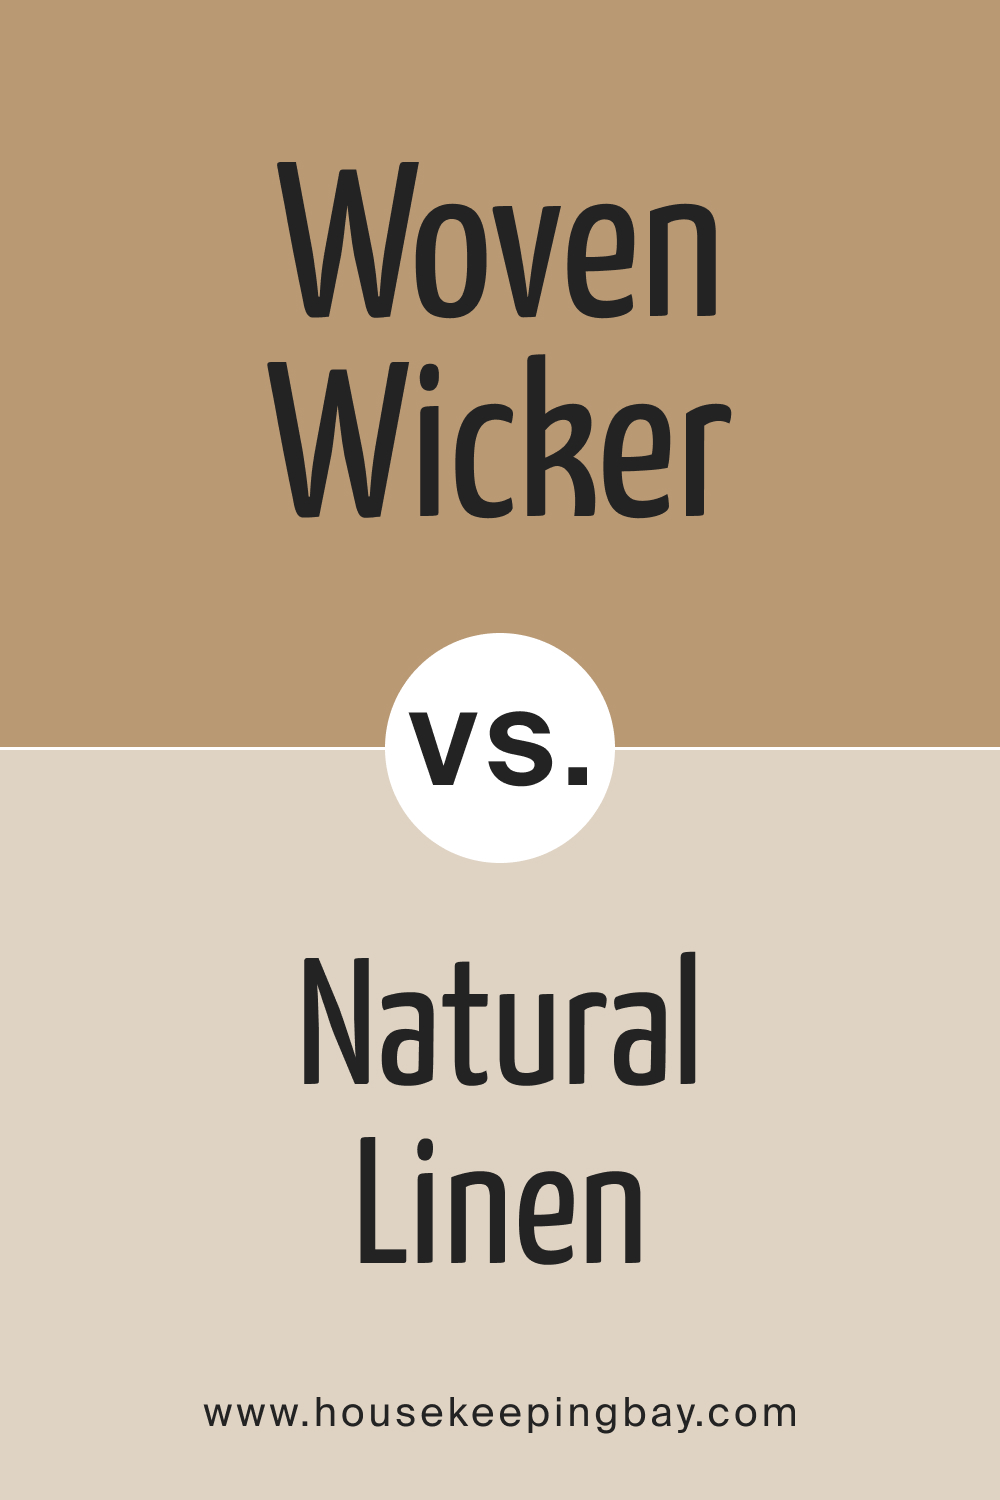 SW 9104 Woven Wicker vs. SW 9109 Natural Linen